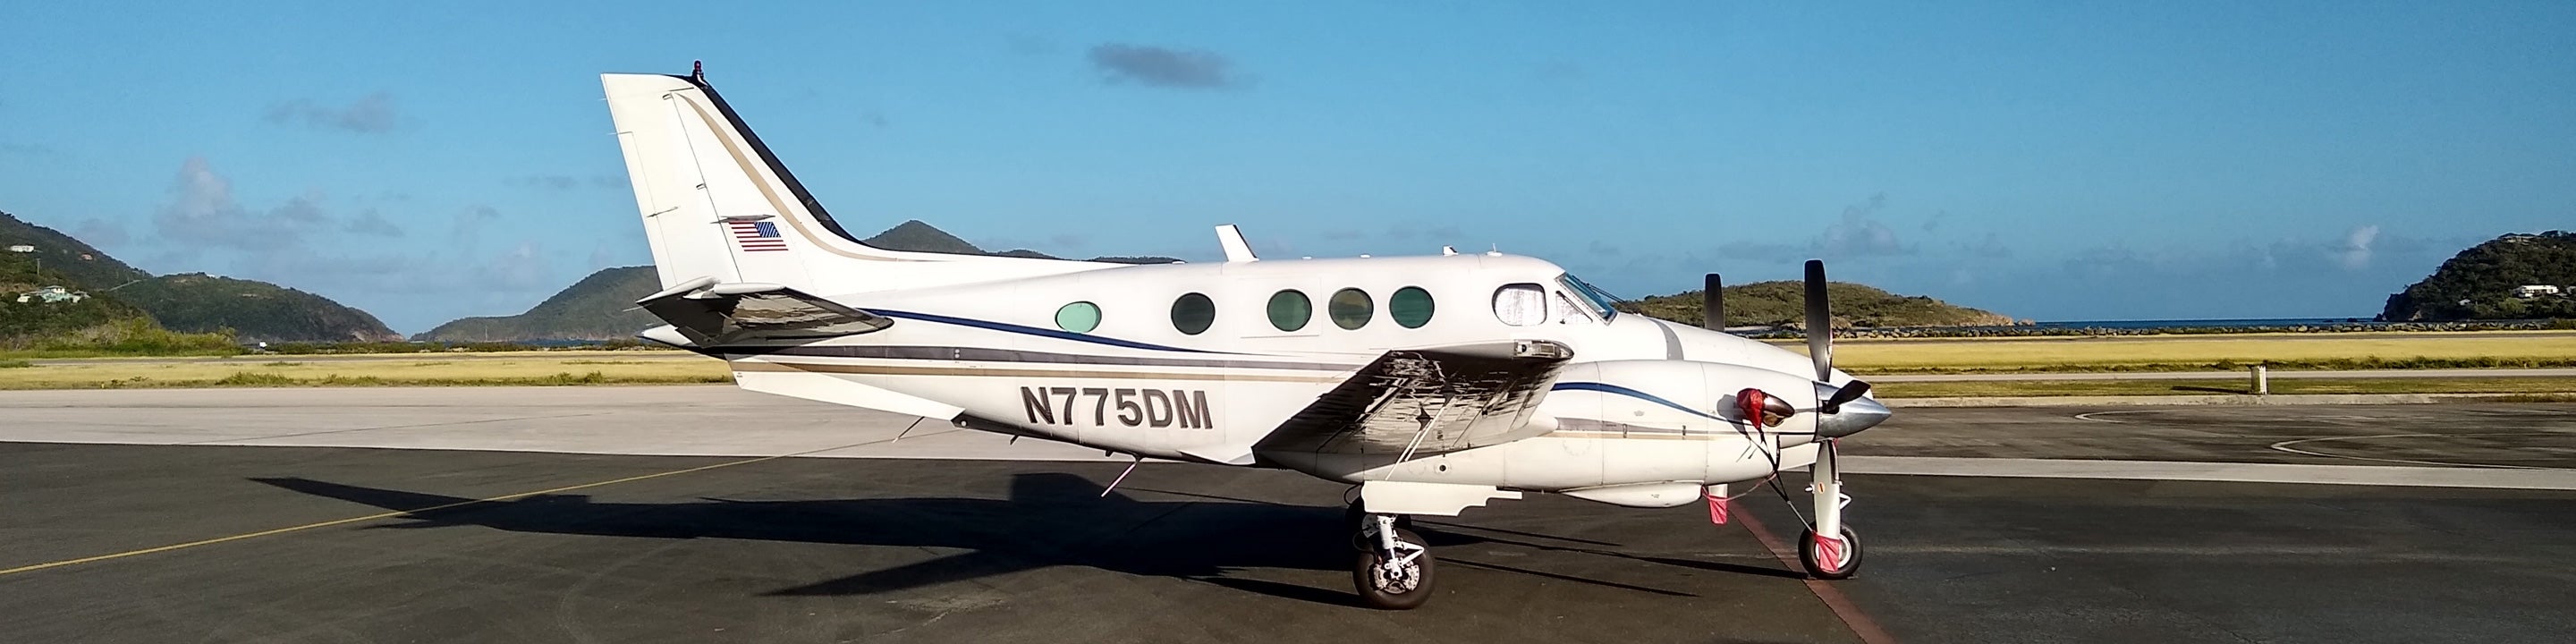 Bode Aviation Aircraft N775DM at Beef Island